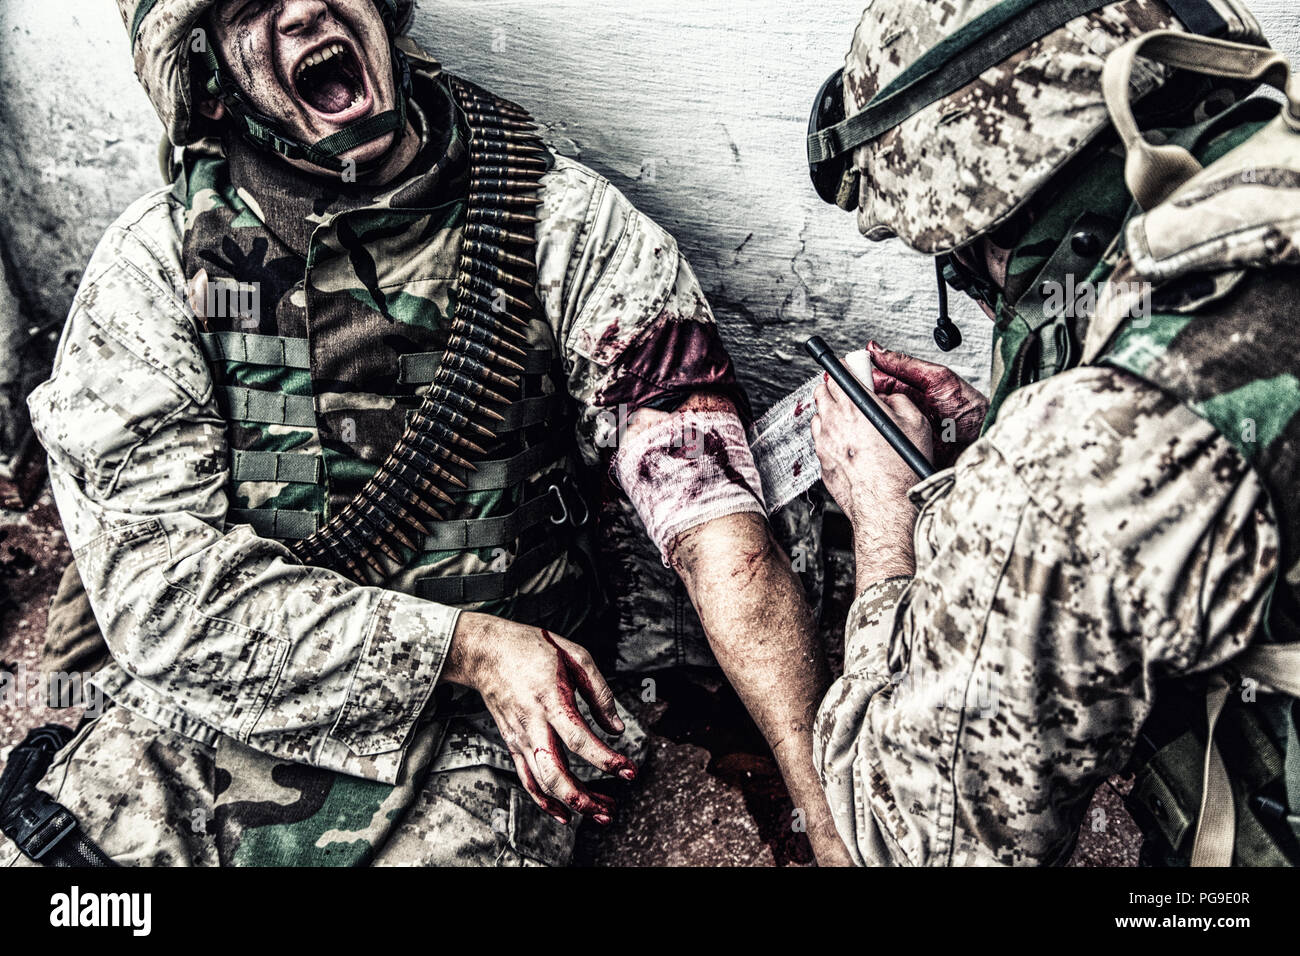 Military medic binding gunshot wound during fight Stock Photo